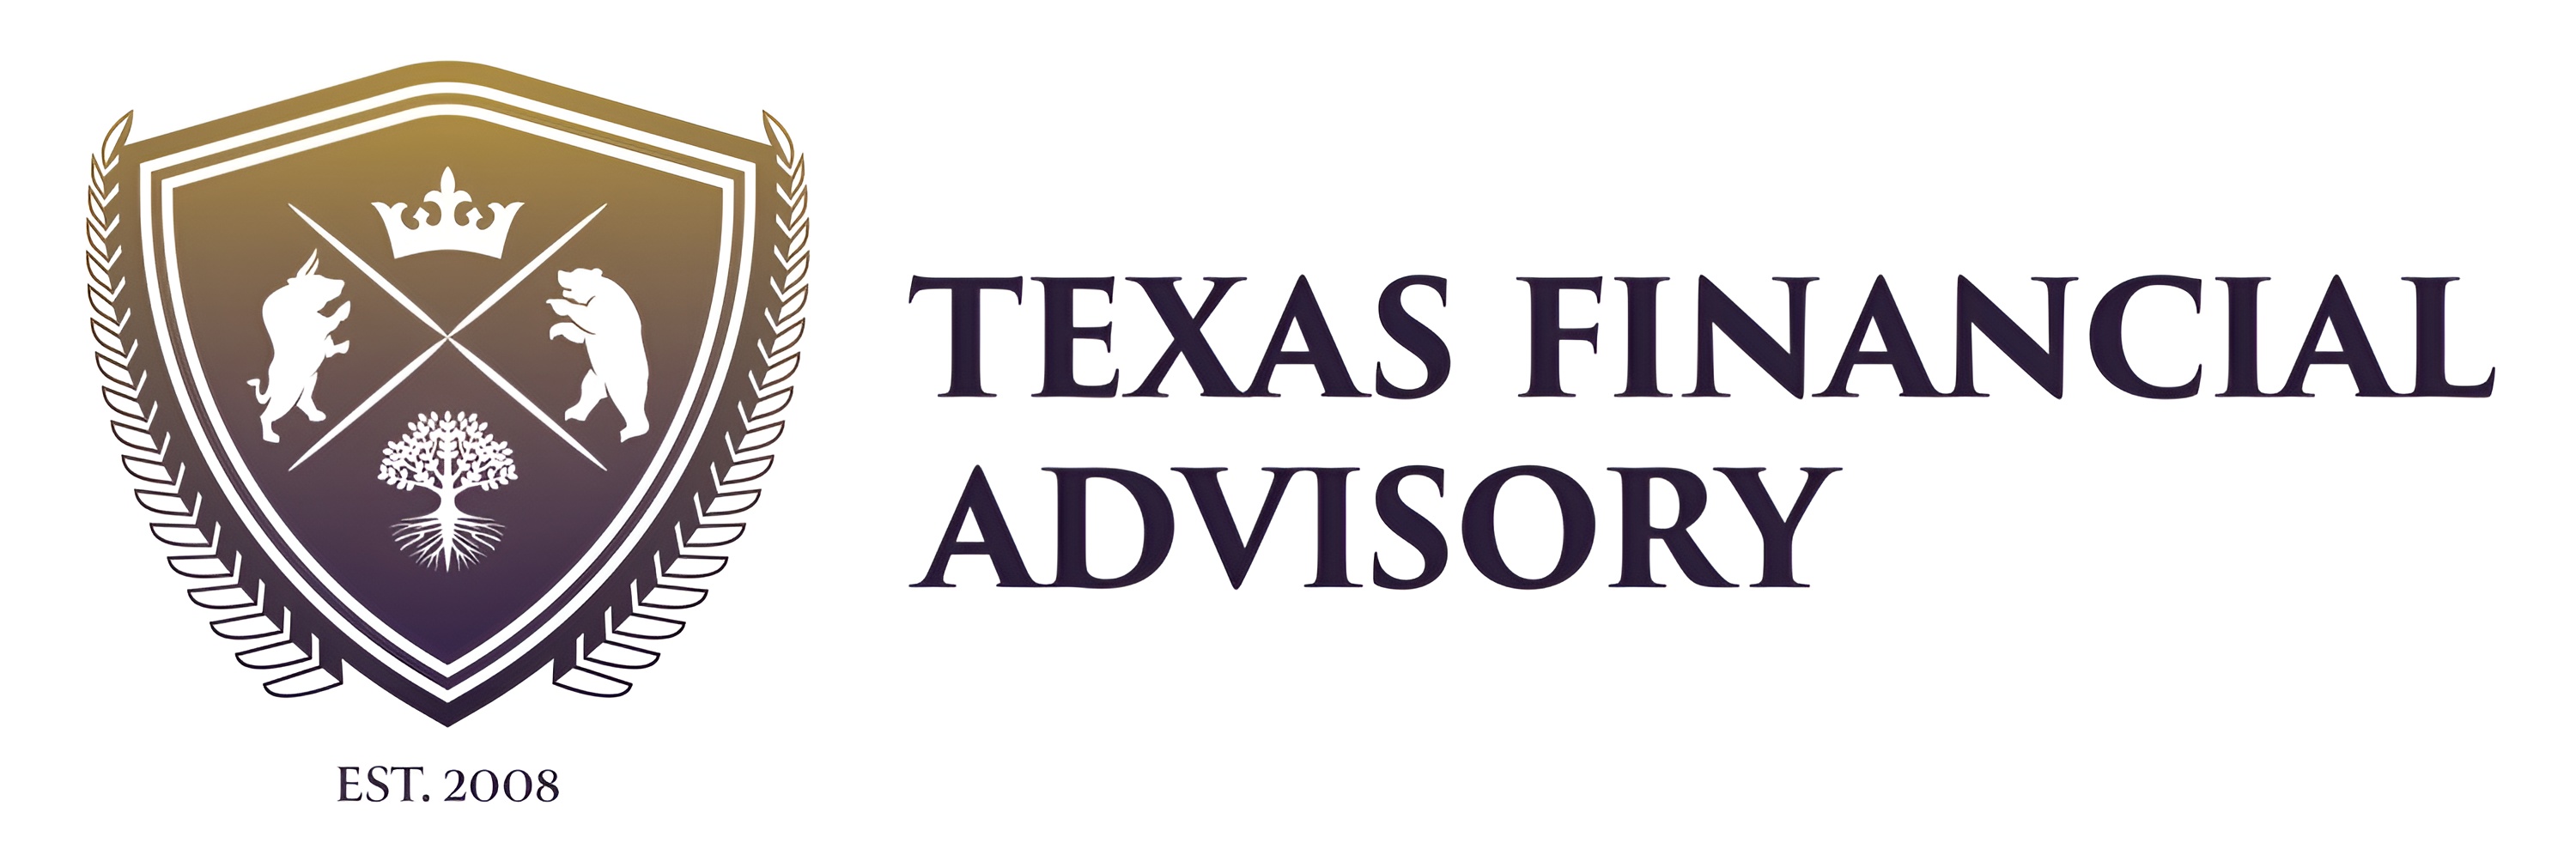 Texas Financial Advisory